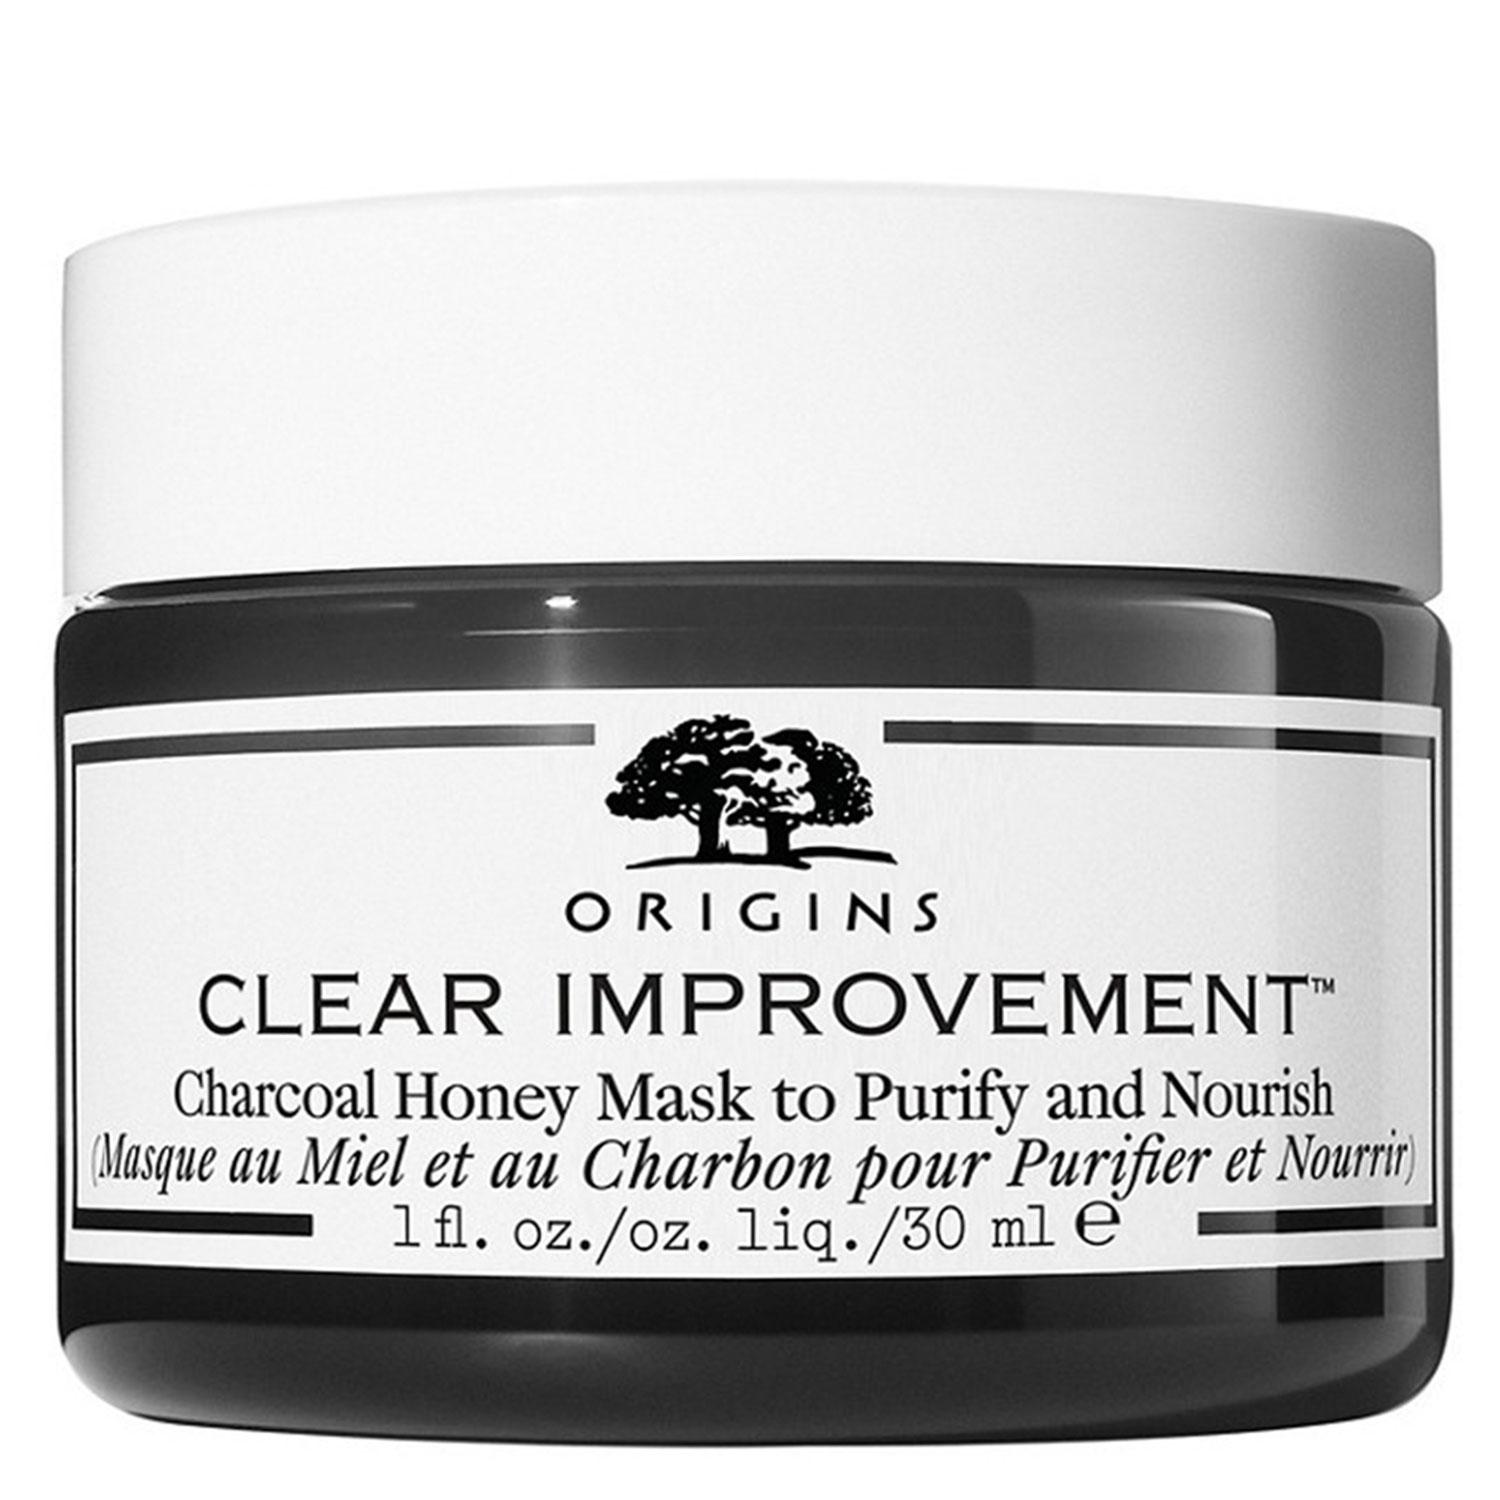 Origins Clear Improvement - Charcoal Honey Mask